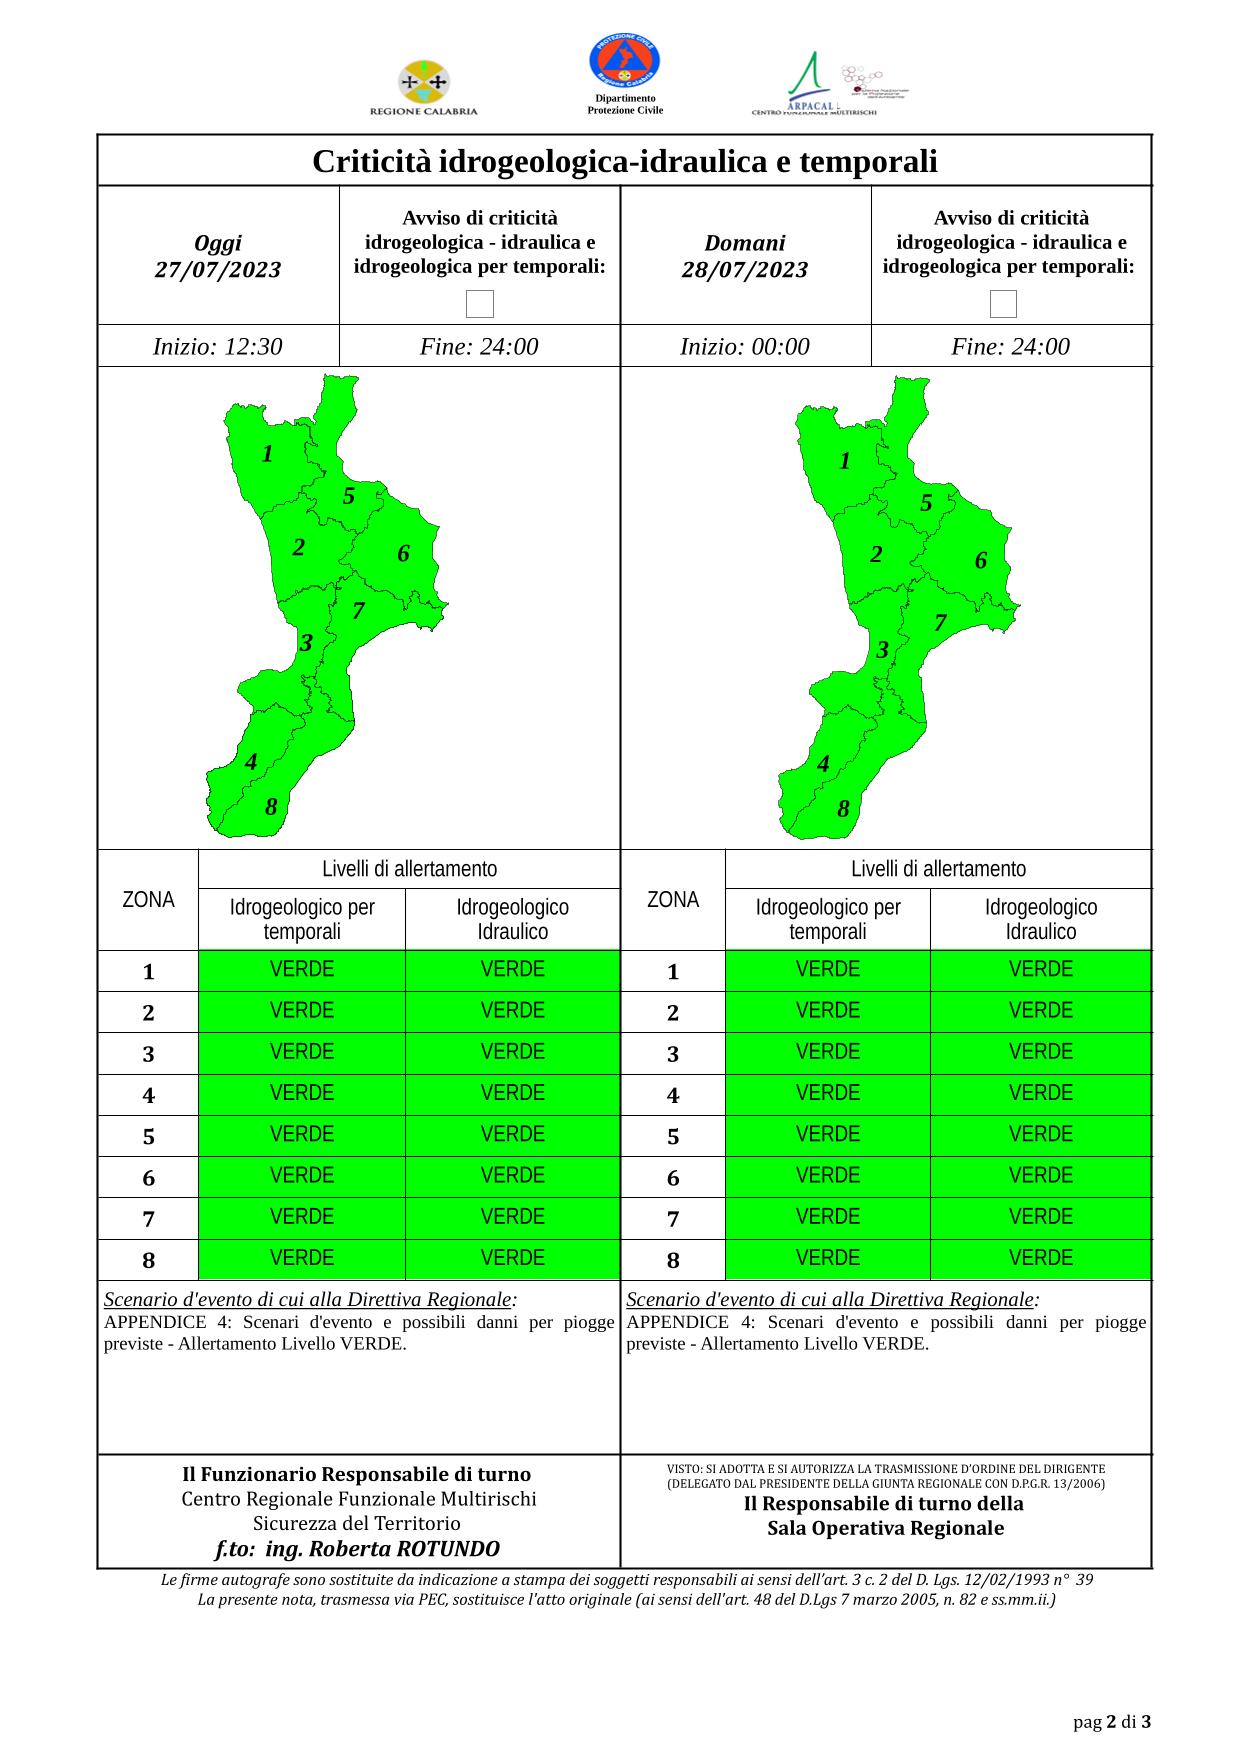 Criticità idrogeologica-idraulica e temporali in Calabria 27-07-2023